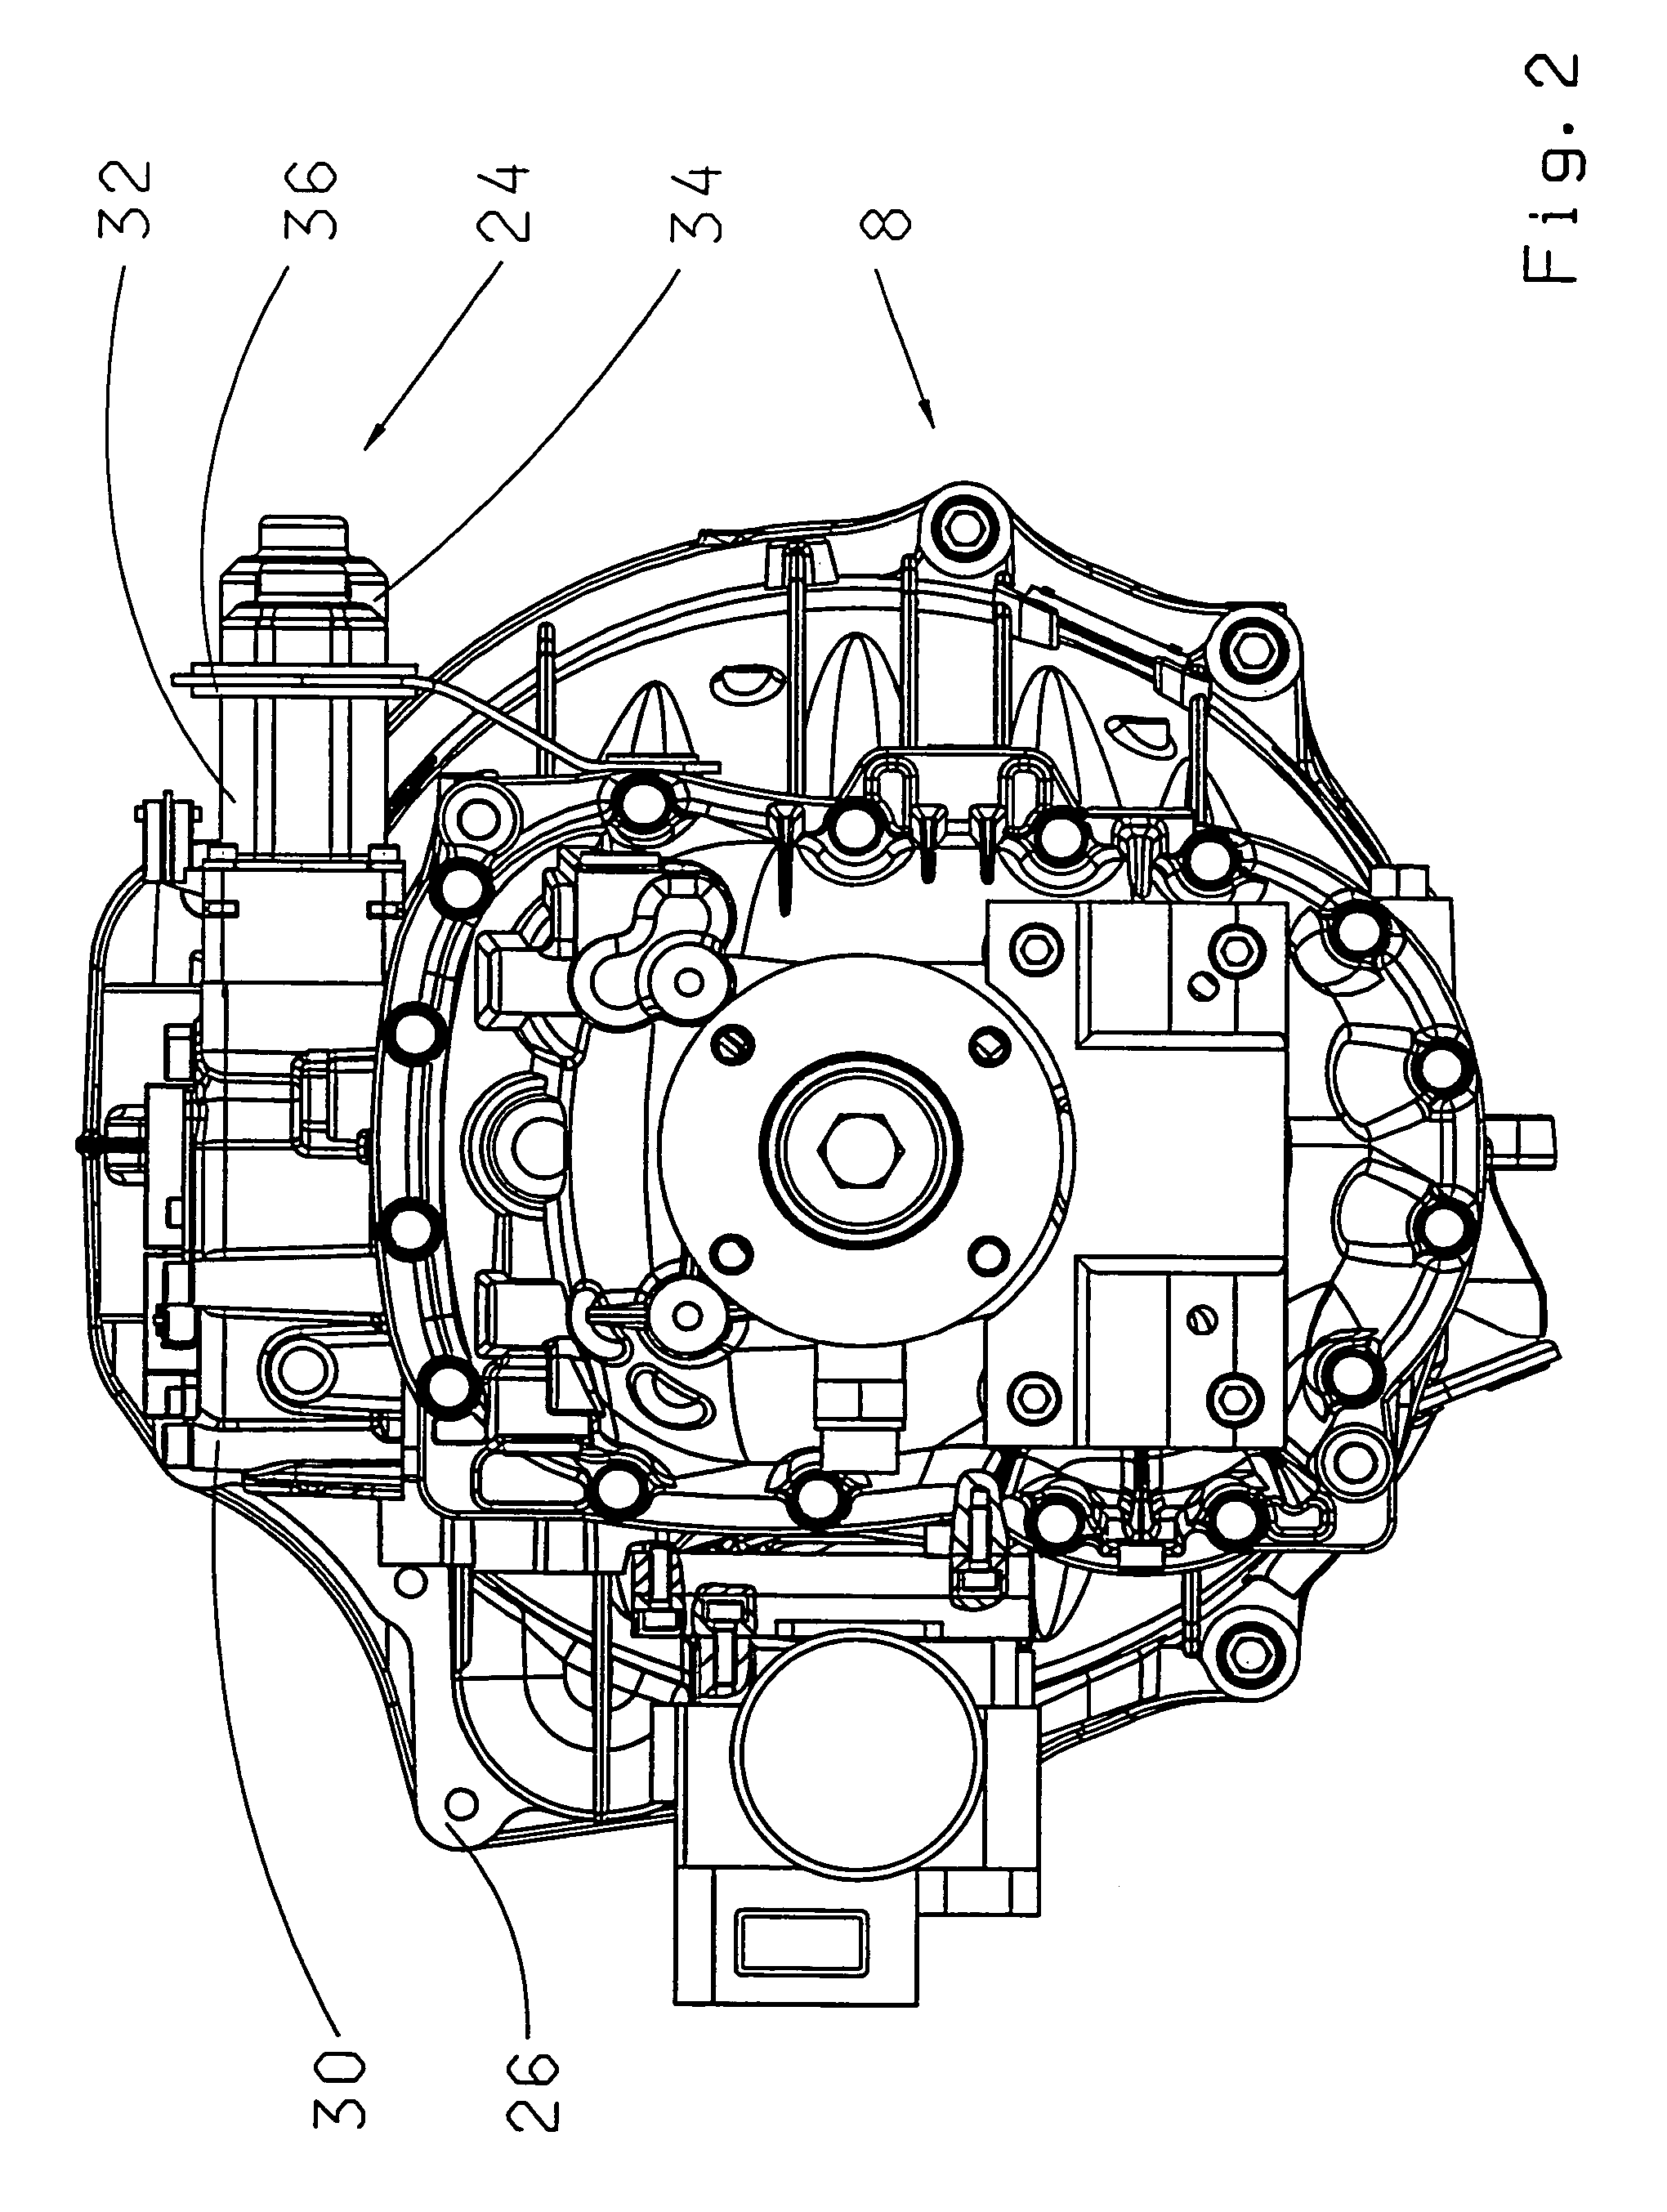 Gearbox comprising an electromechanical actuator